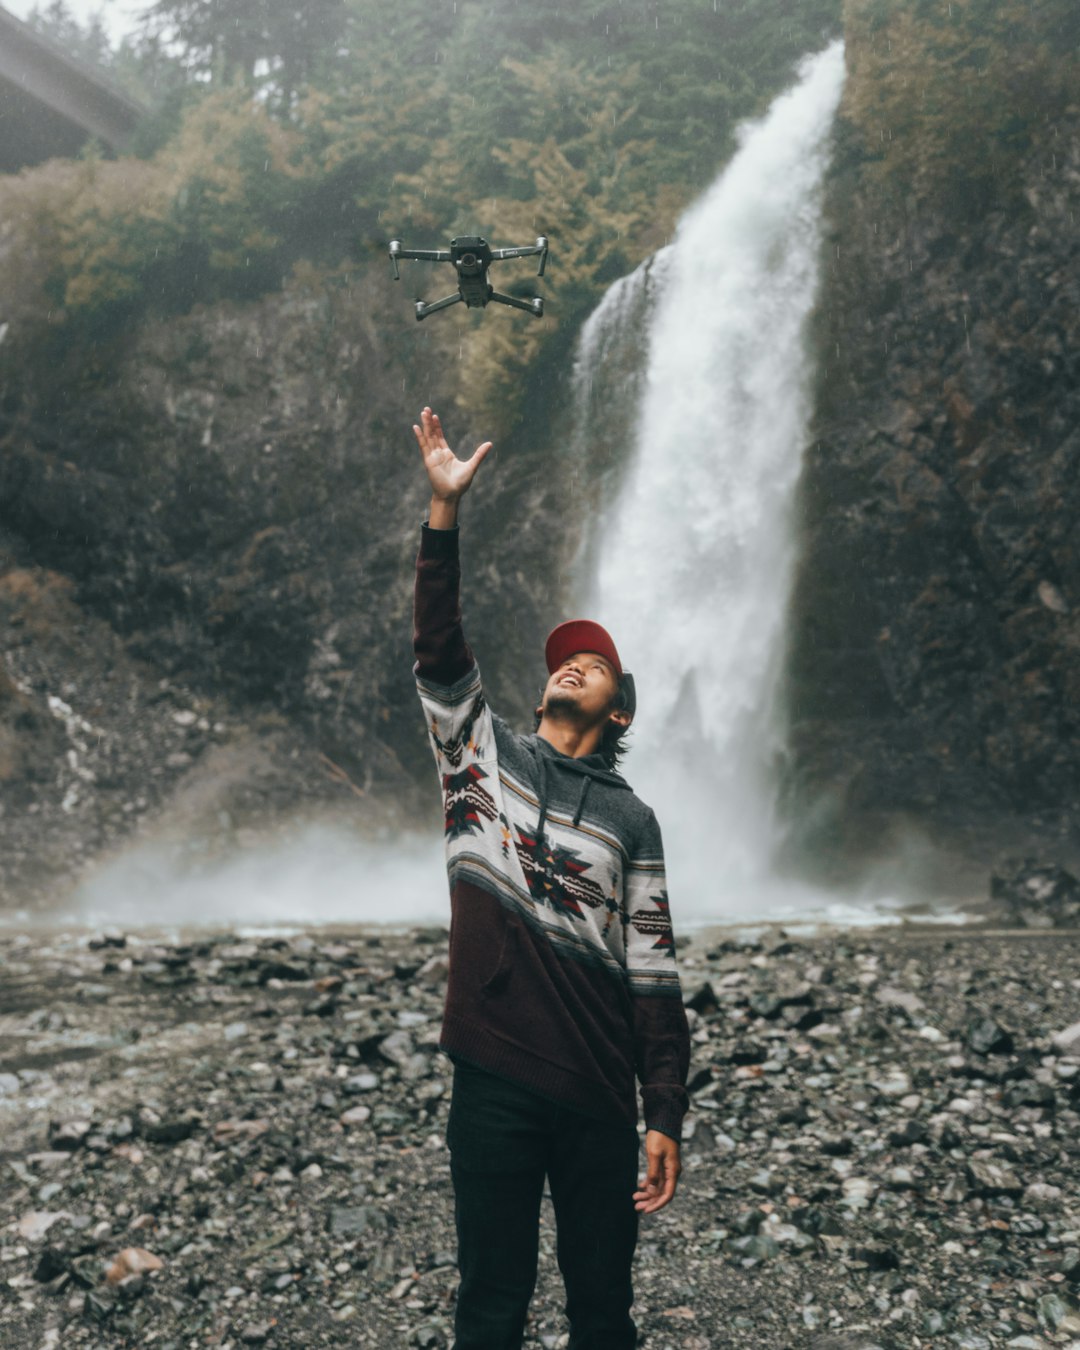 man reaching flying quadcopter near water fall